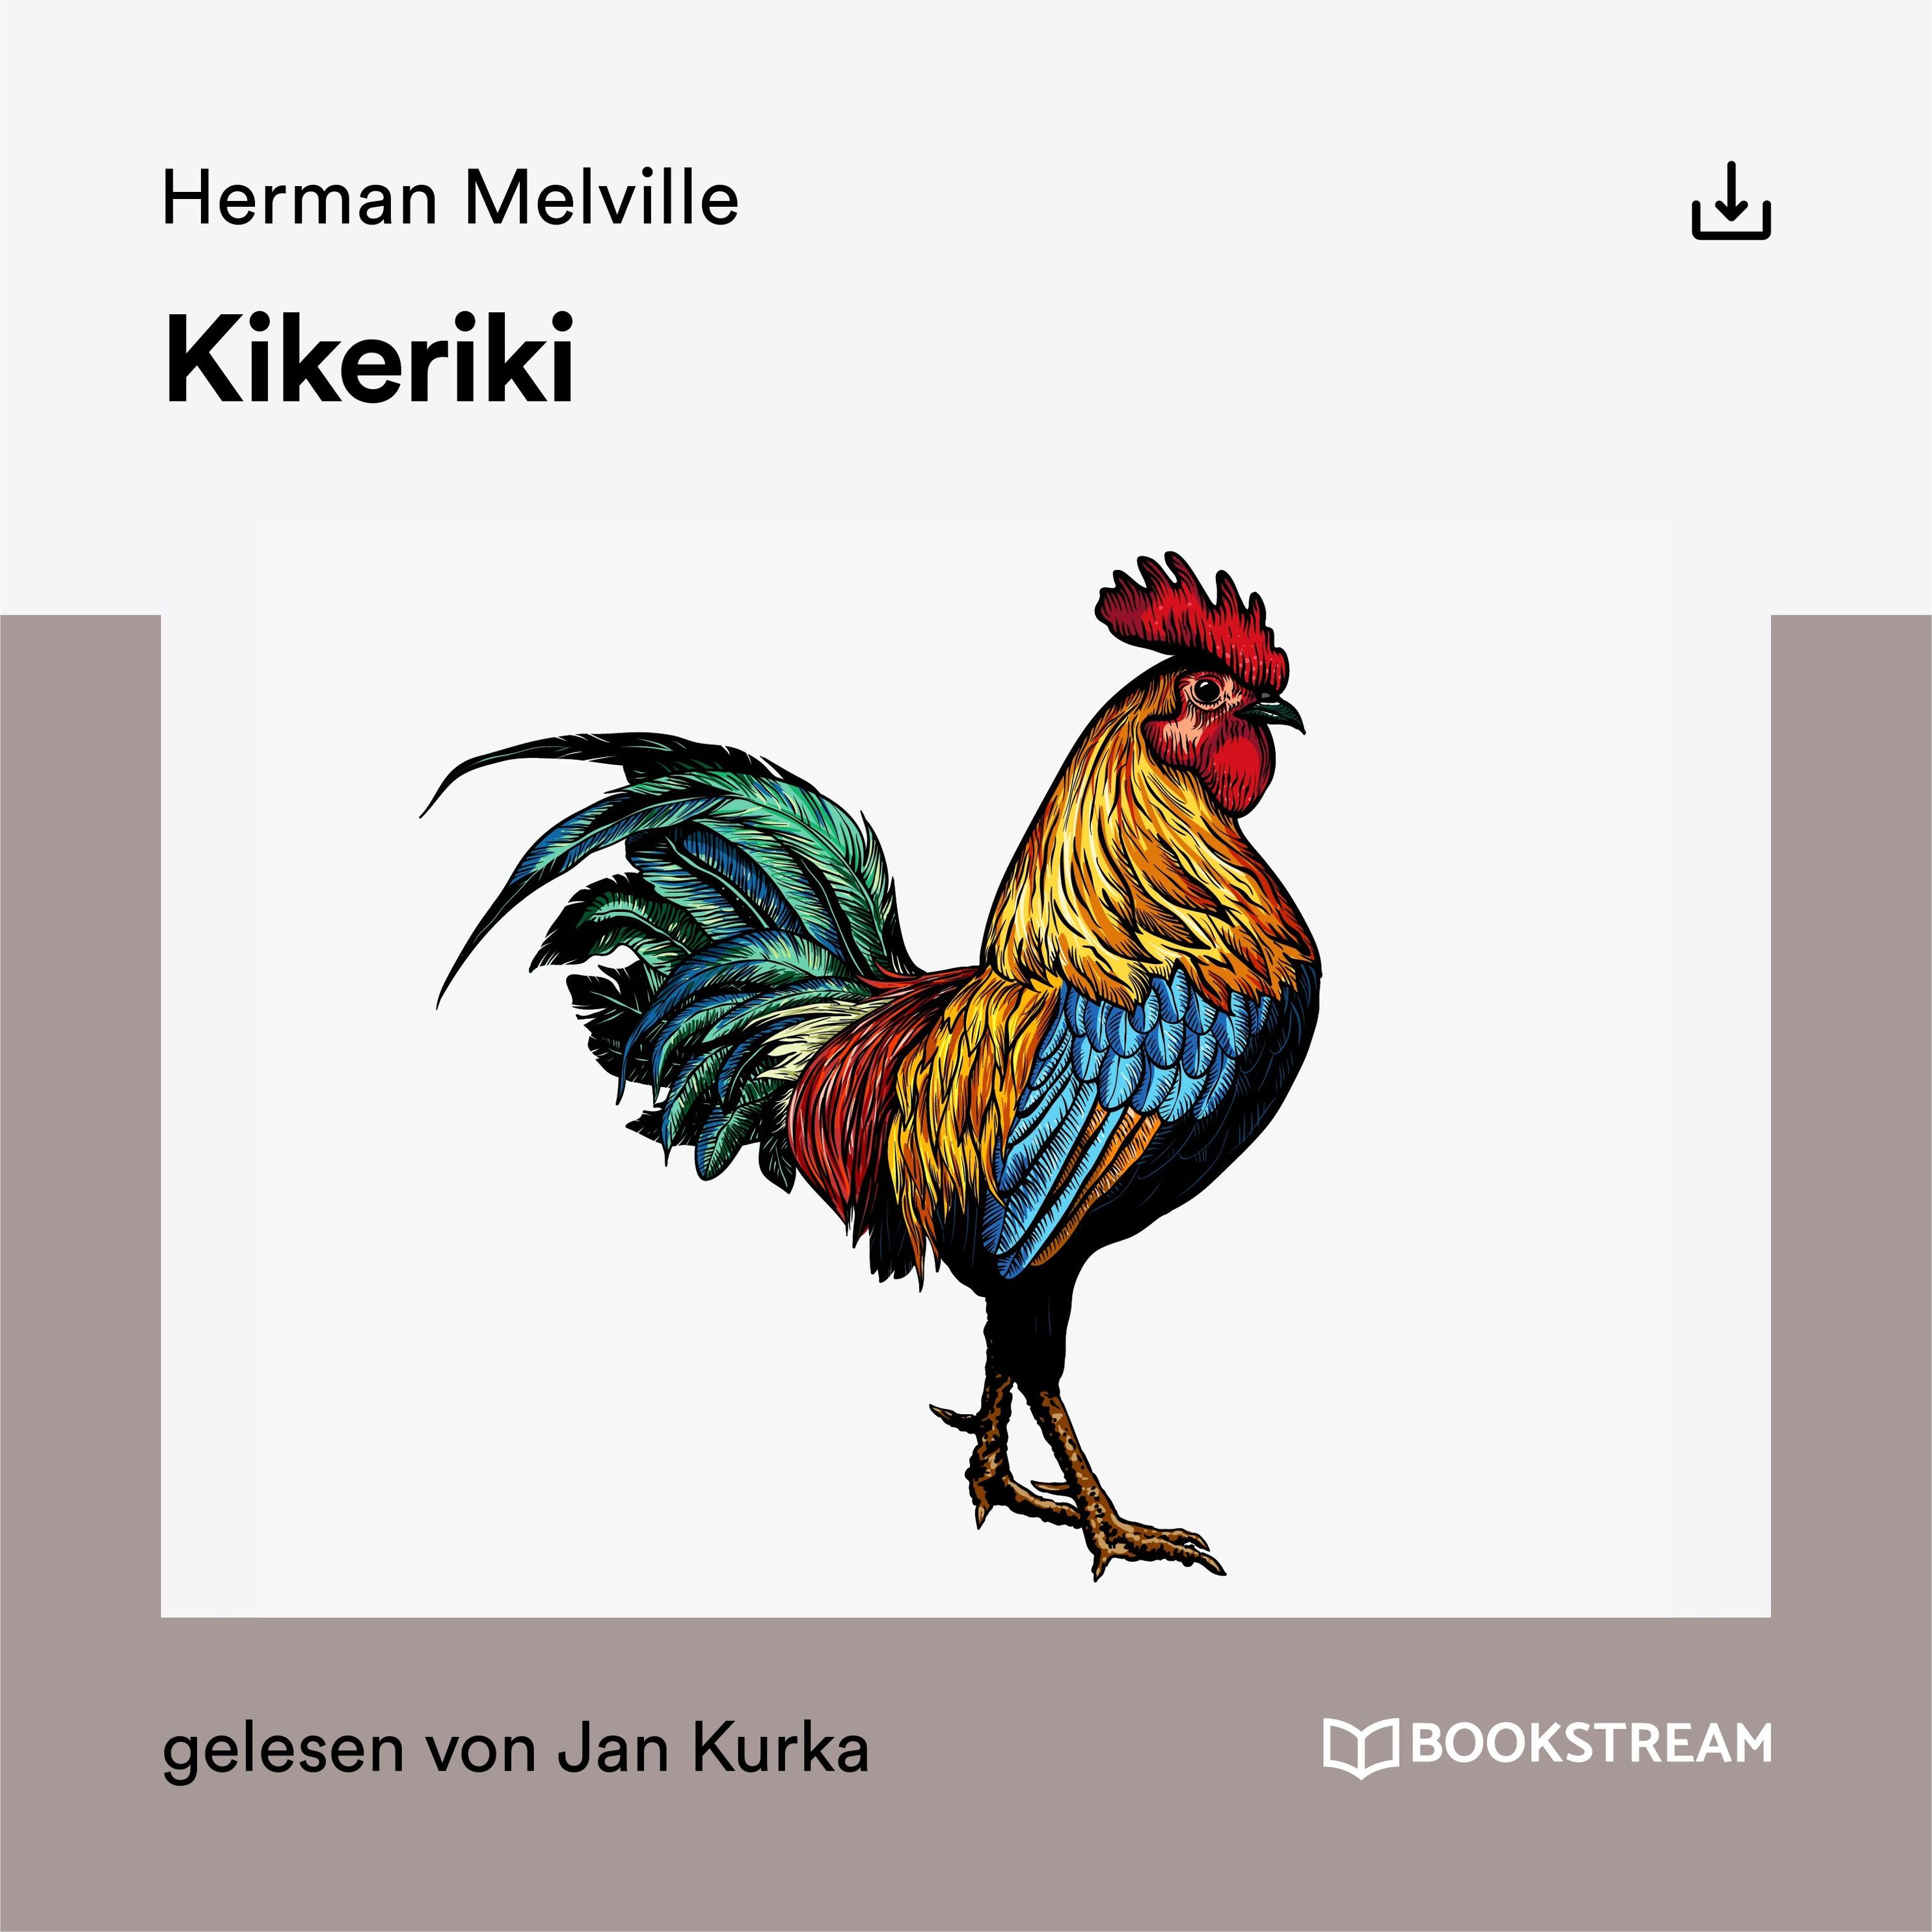 Kikeriki Hörbuch sicher downloaden - jetzt bei Weltbild.de!